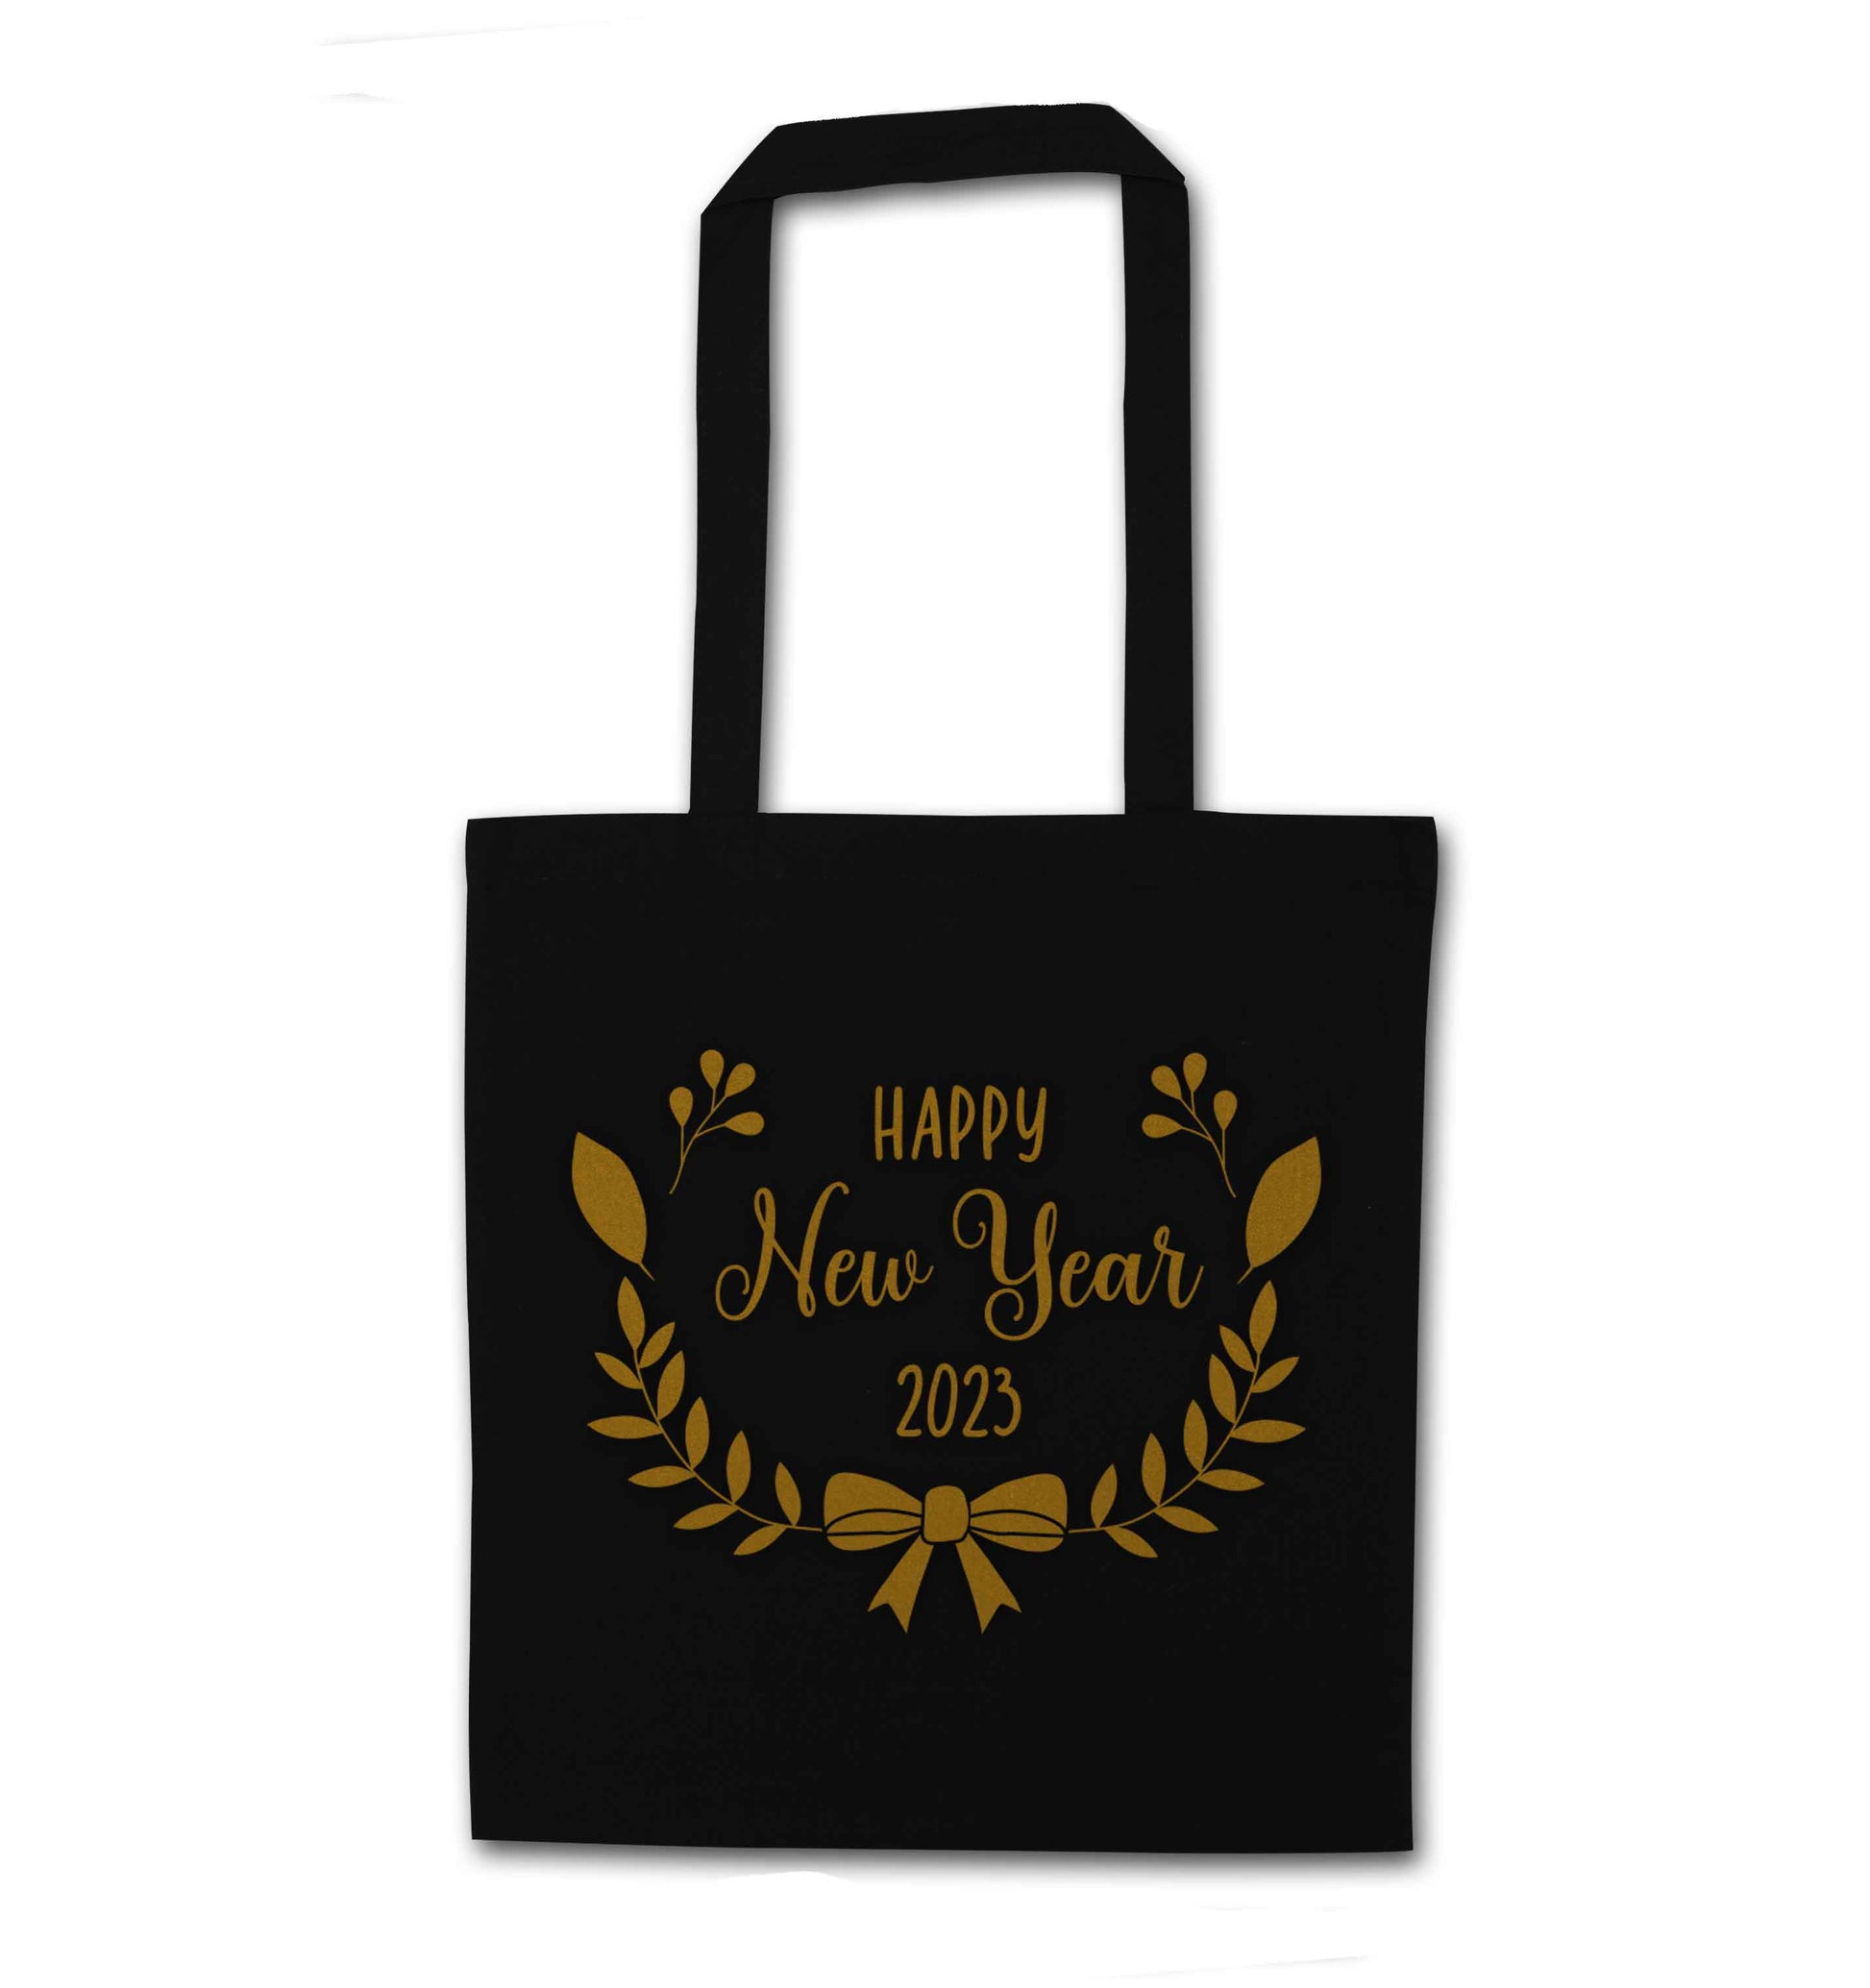 Happy New Year 2023 black tote bag